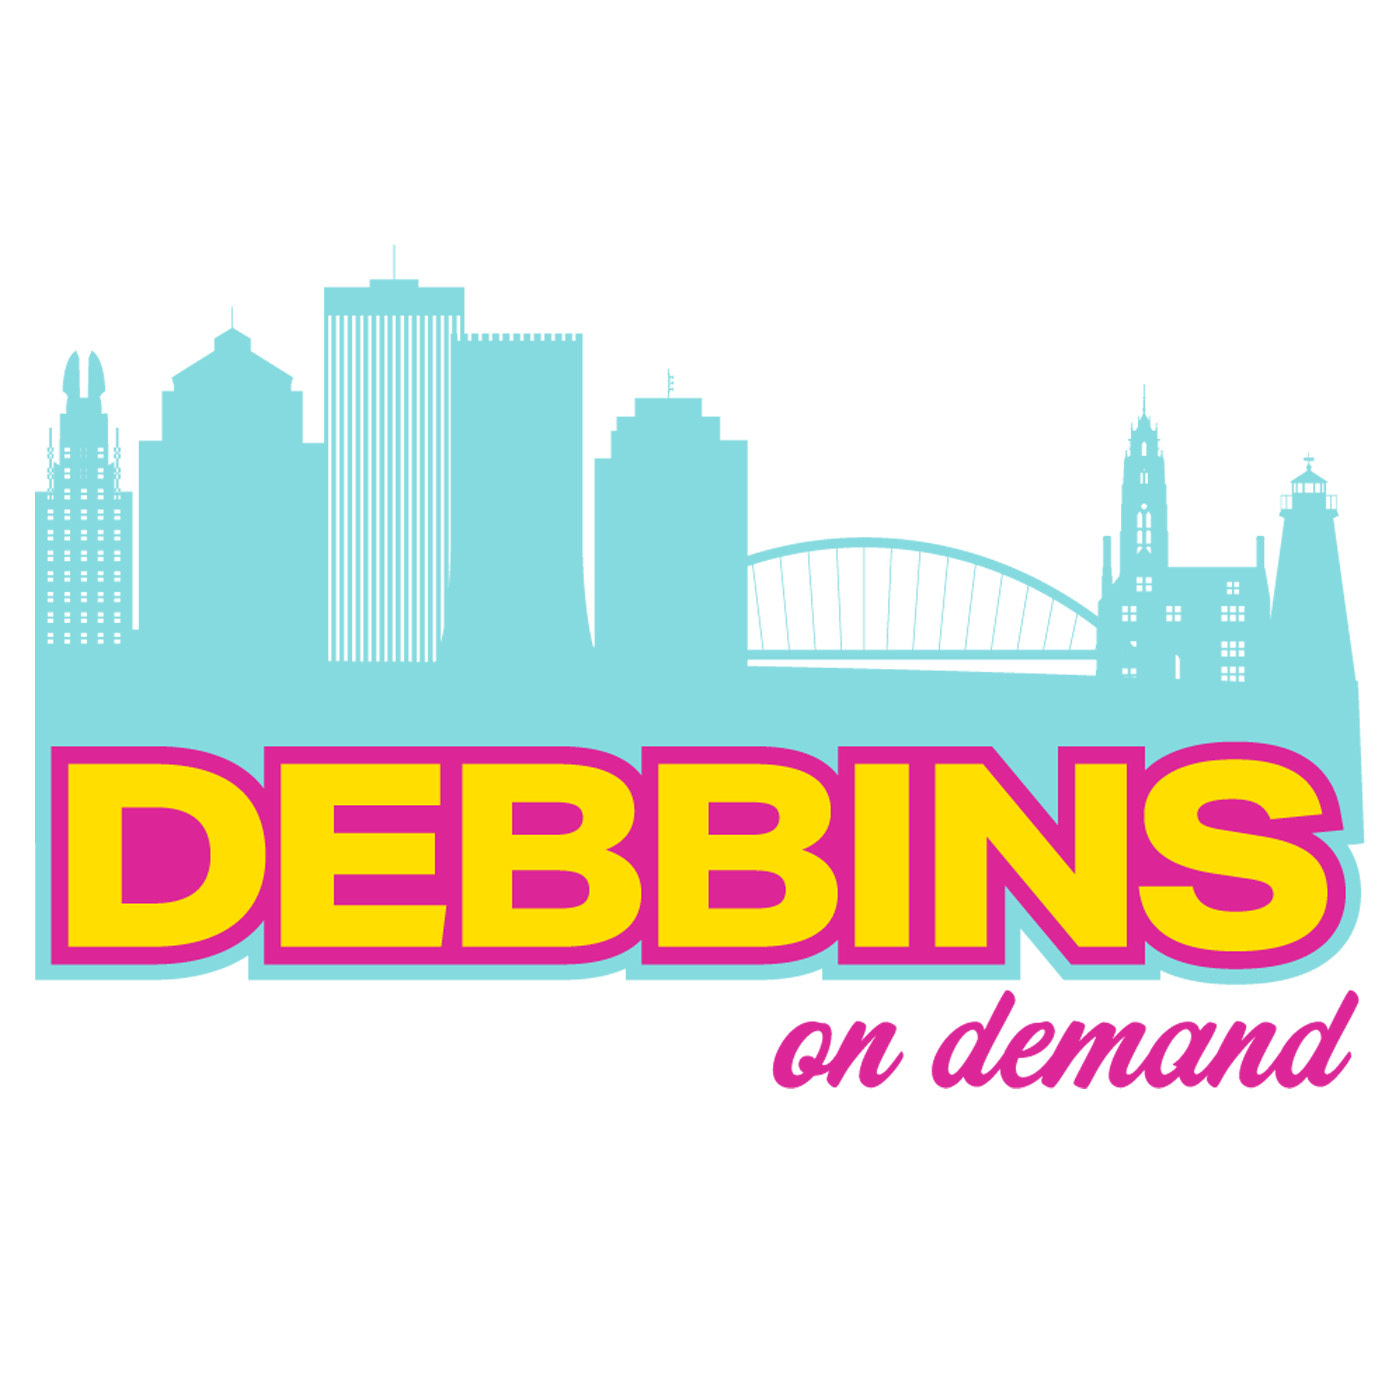 Debbins On Demand